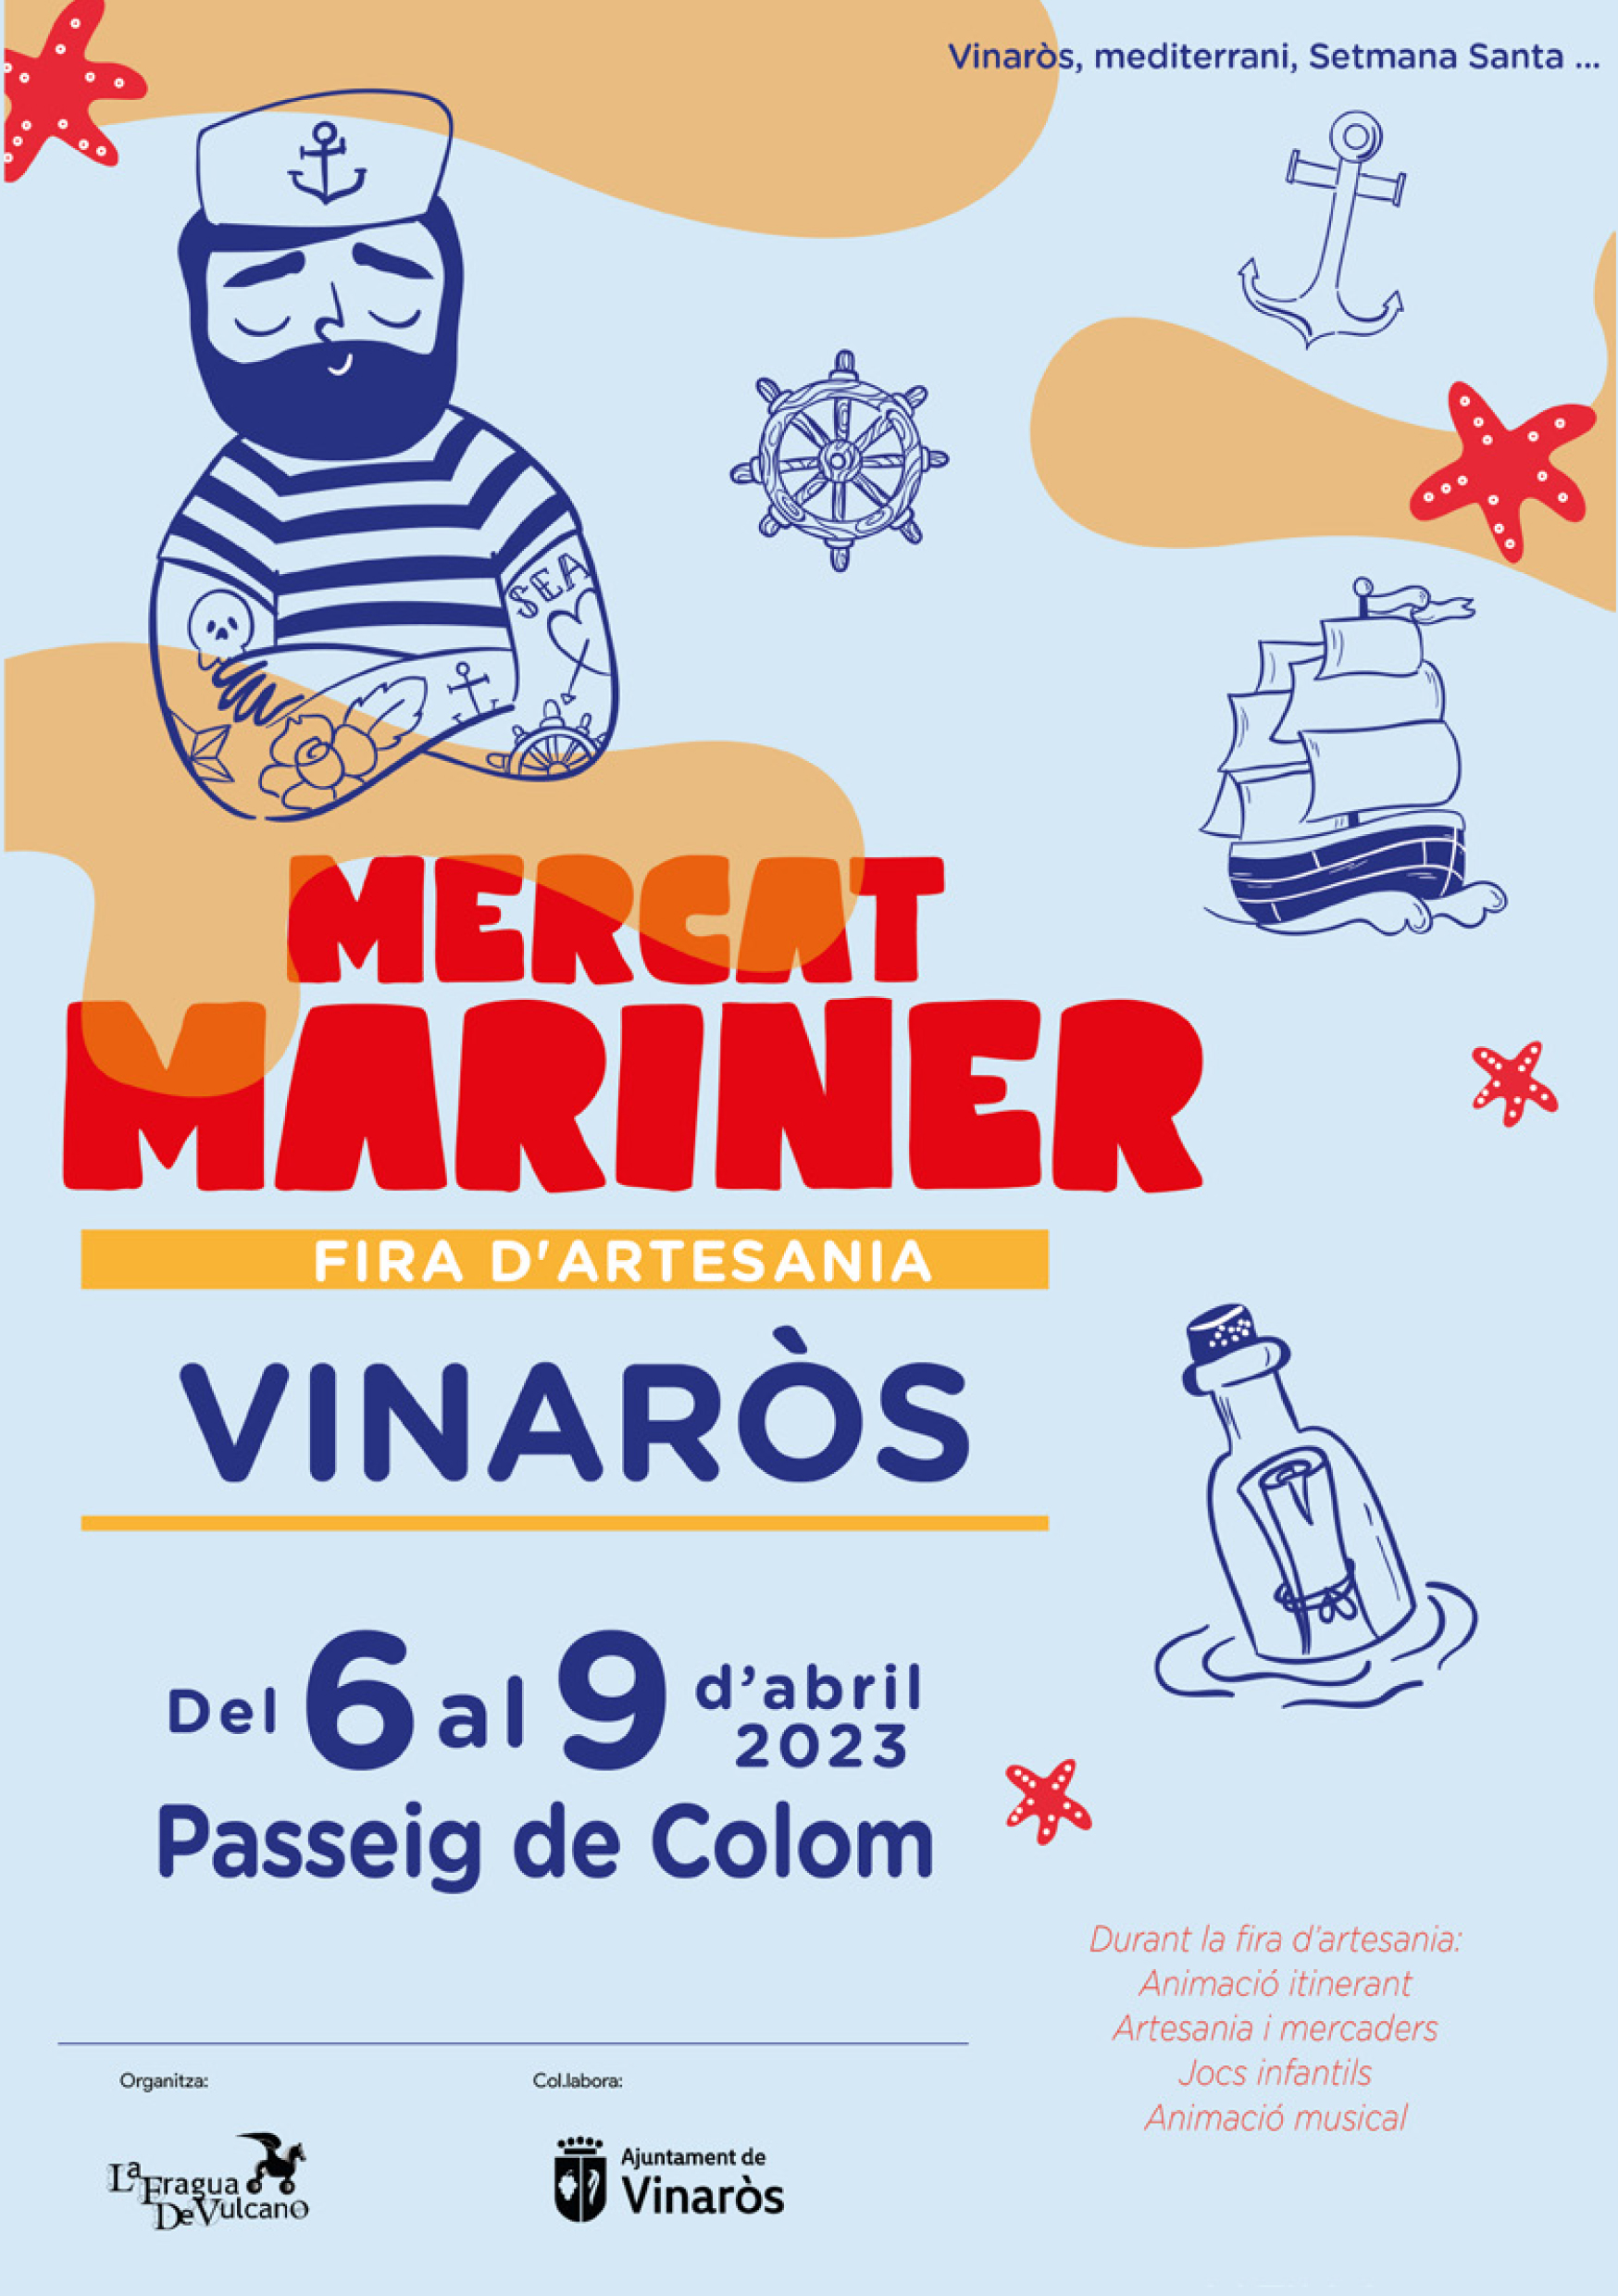 Mercat Mariner